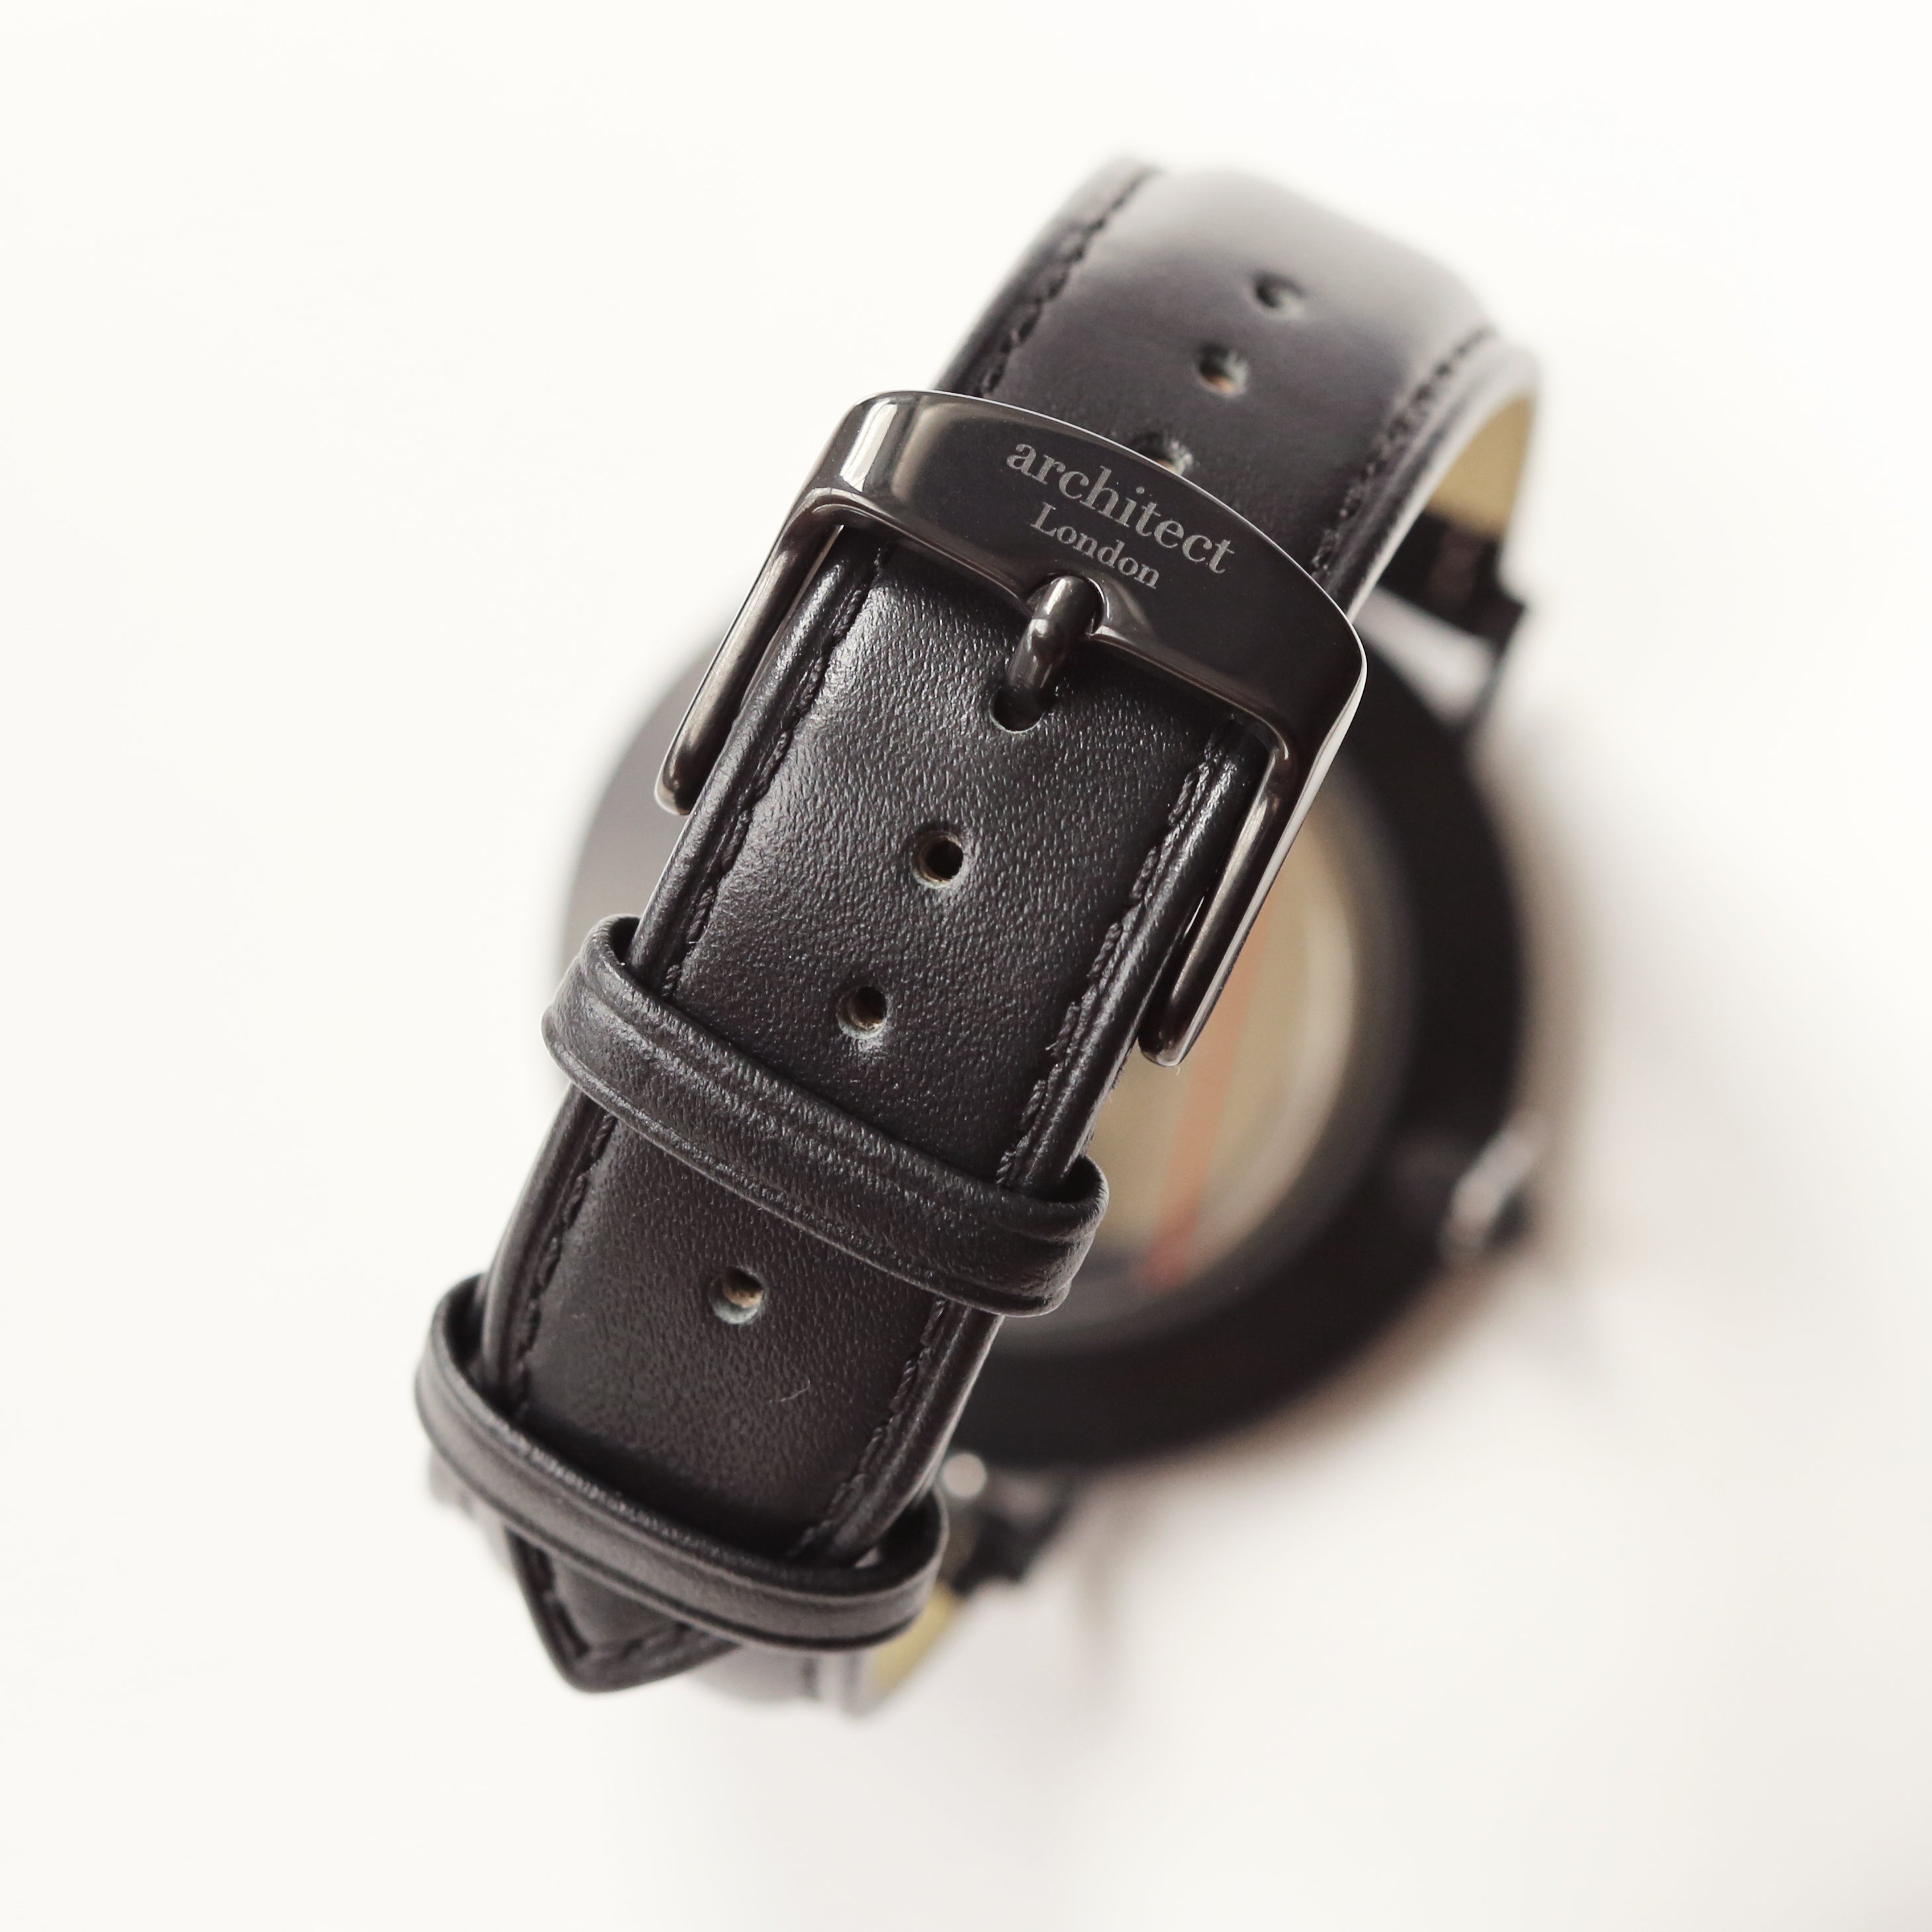 Modern Font Engraving - Men's Minimalist Watch + Jet Black Strap